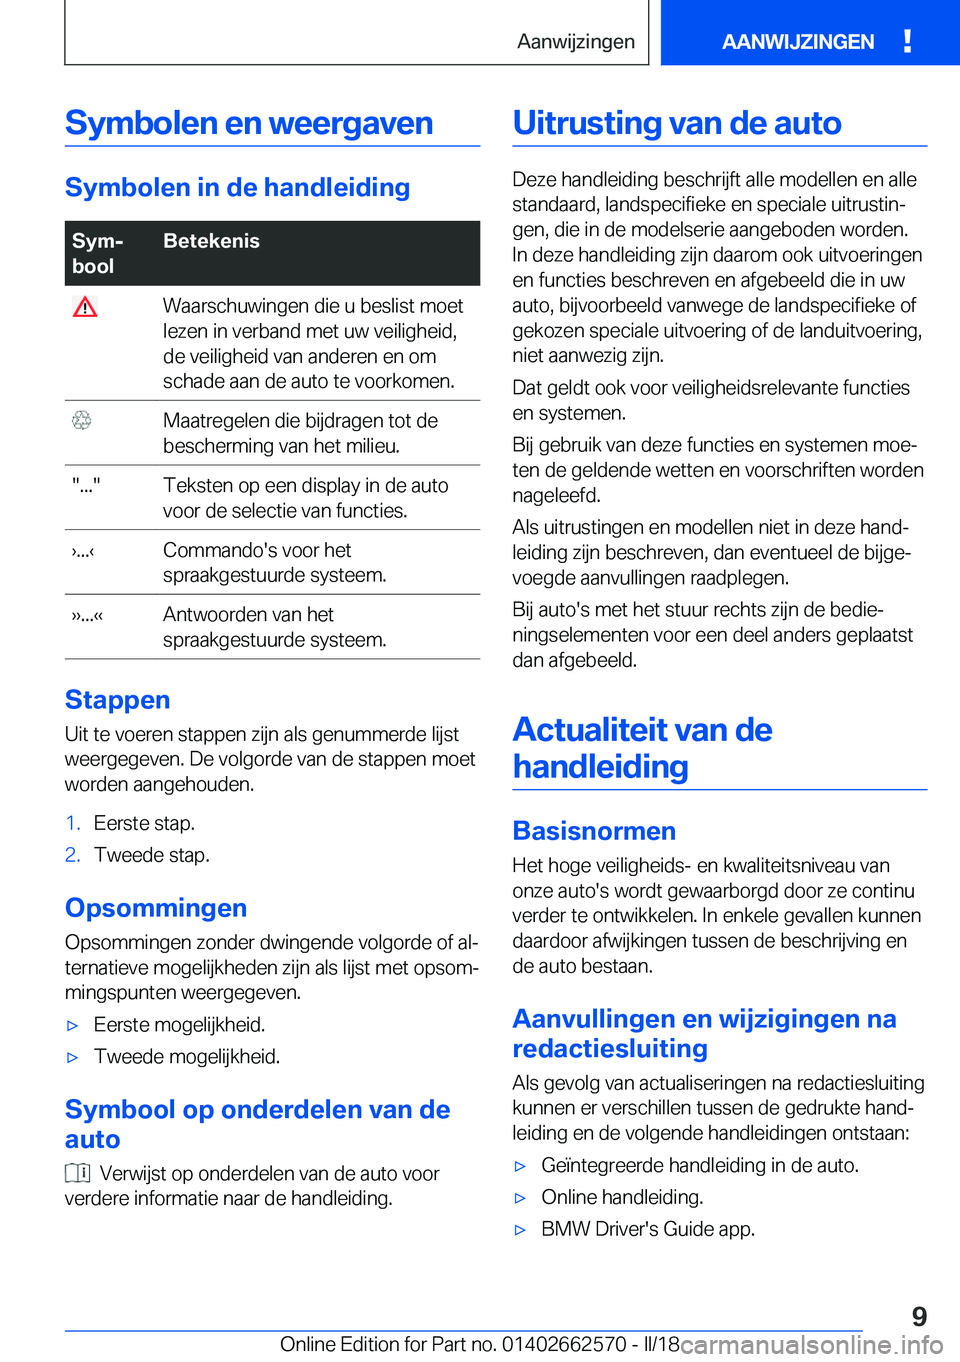 BMW M2 2018  Instructieboekjes (in Dutch) �S�y�m�b�o�l�e�n��e�n��w�e�e�r�g�a�v�e�n
�S�y�m�b�o�l�e�n��i�n��d�e��h�a�n�d�l�e�i�d�i�n�g
�S�y�mj
�b�o�o�l�B�e�t�e�k�e�n�i�s� �W�a�a�r�s�c�h�u�w�i�n�g�e�n� �d�i�e� �u� �b�e�s�l�i�s�t� �m�o�e�t
